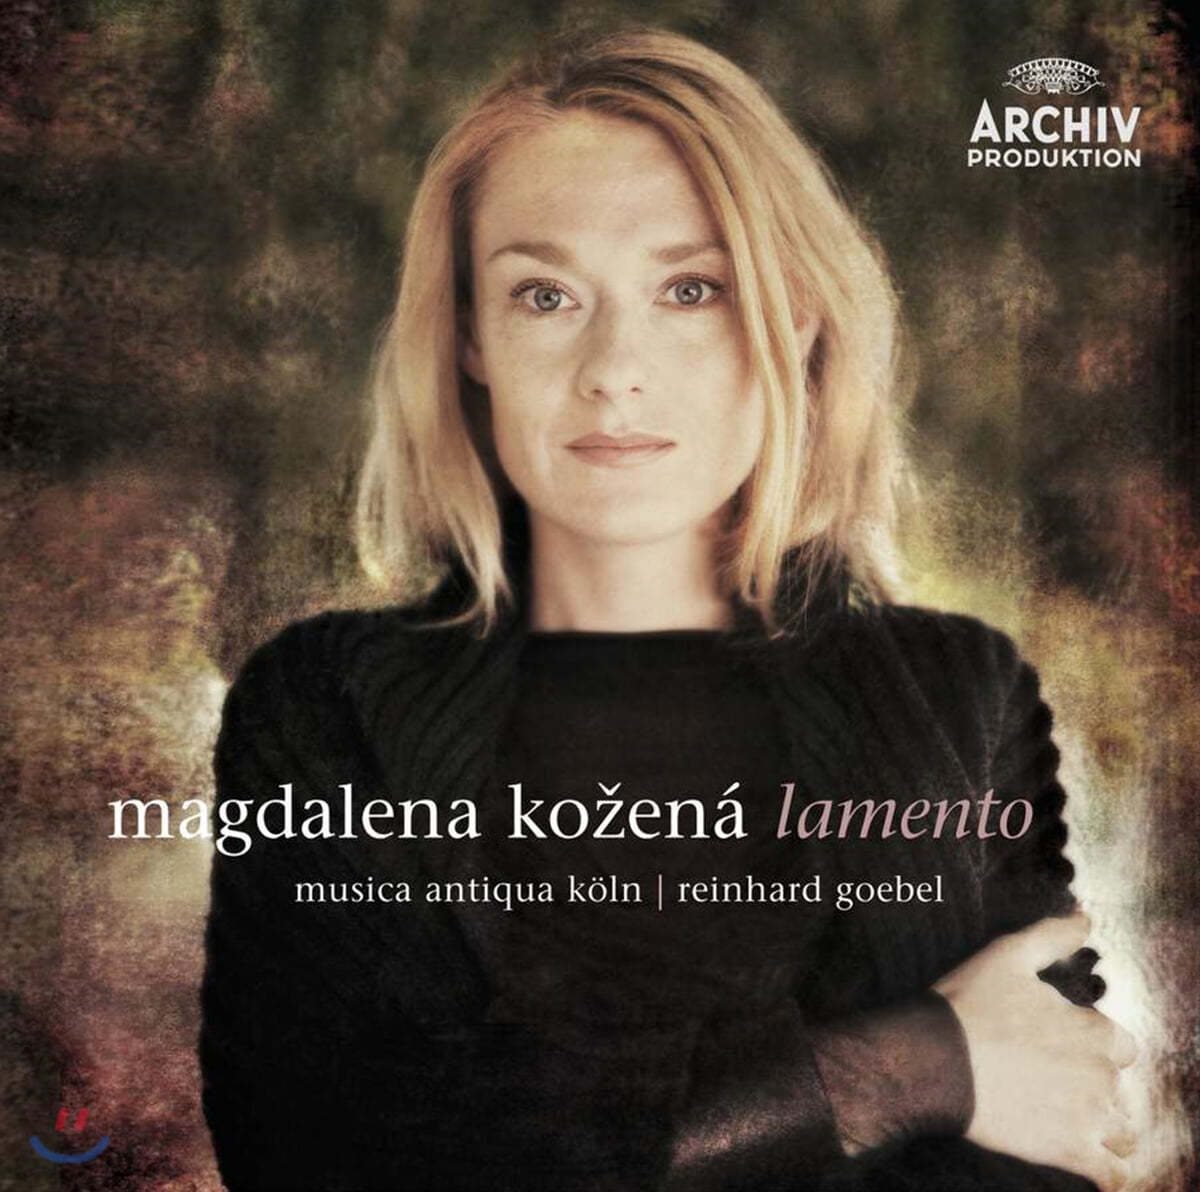 Magdalena Kozena 라멘토 - 바흐 패밀리 성악곡 모음집 (Lamento)